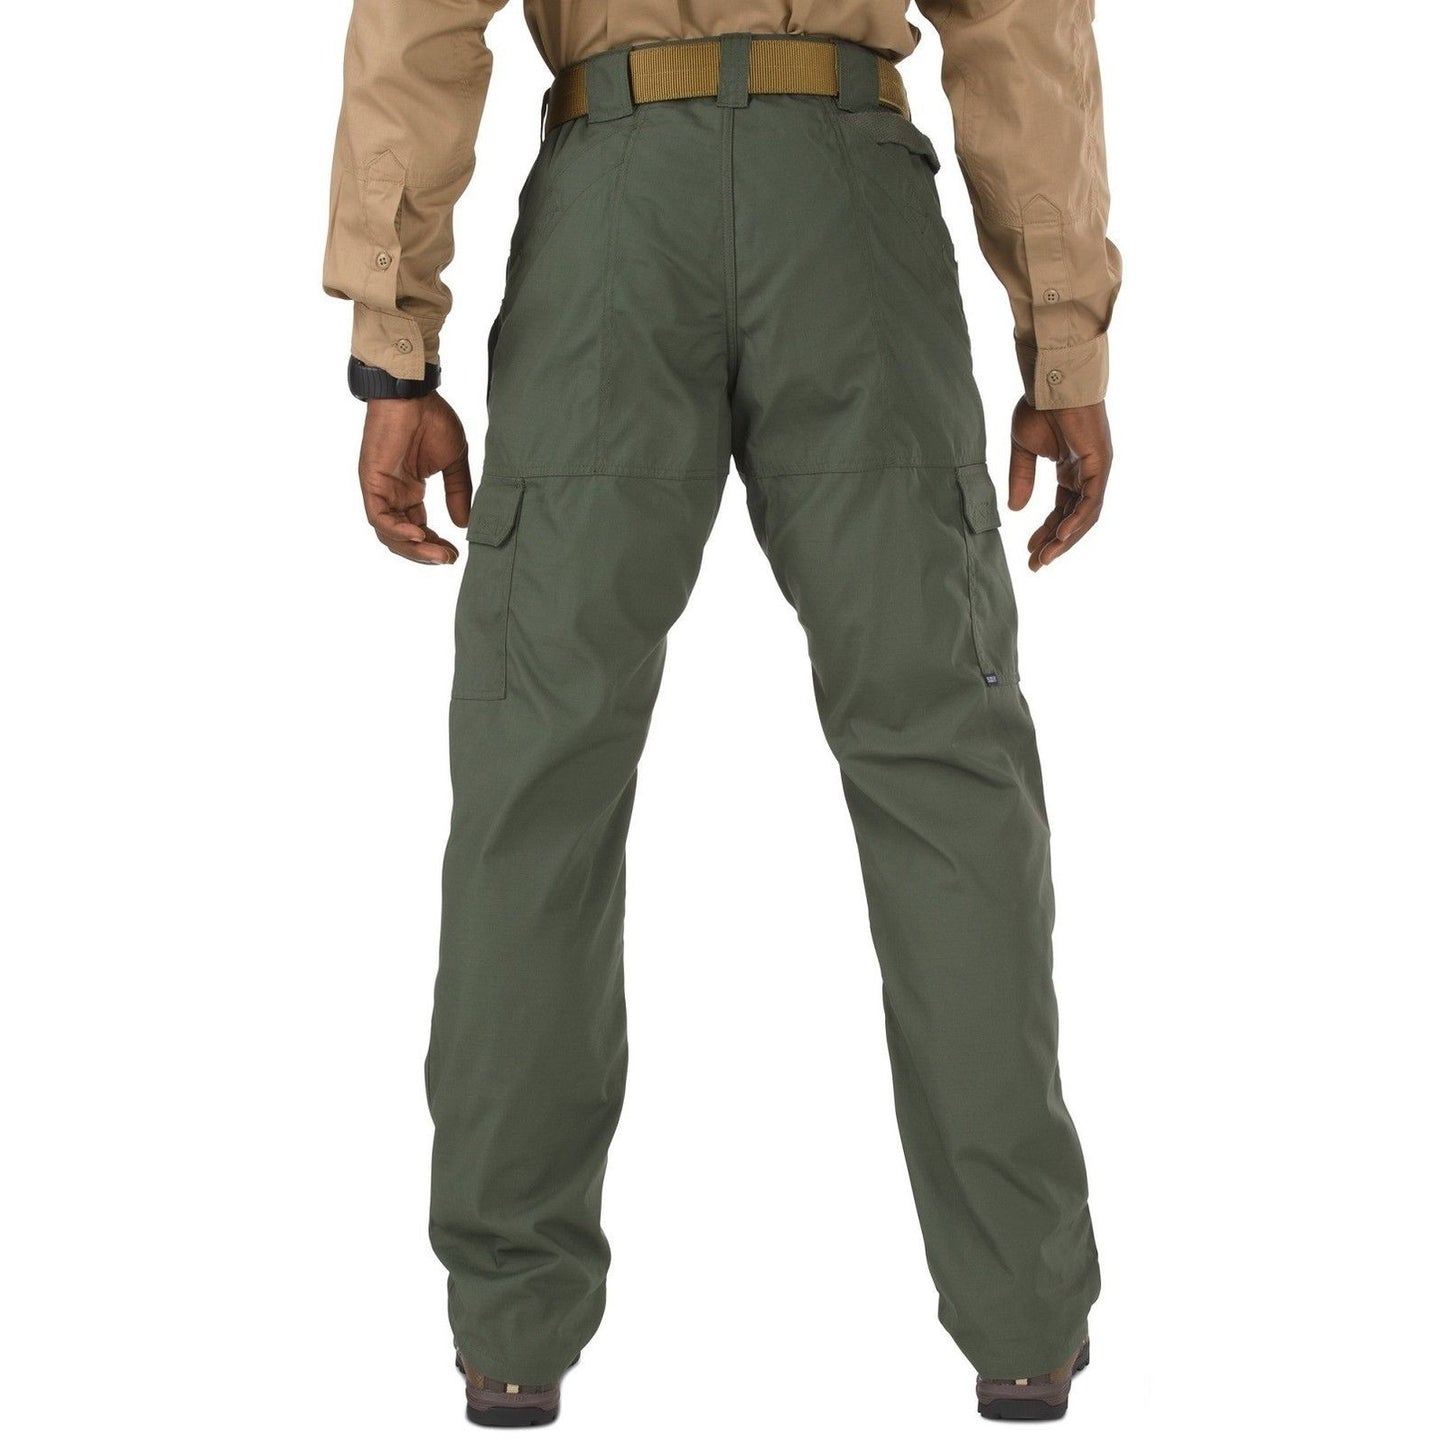 5.11 Tactical Taclite® Professional Cargo Pants Mens Field Duty Work Pant